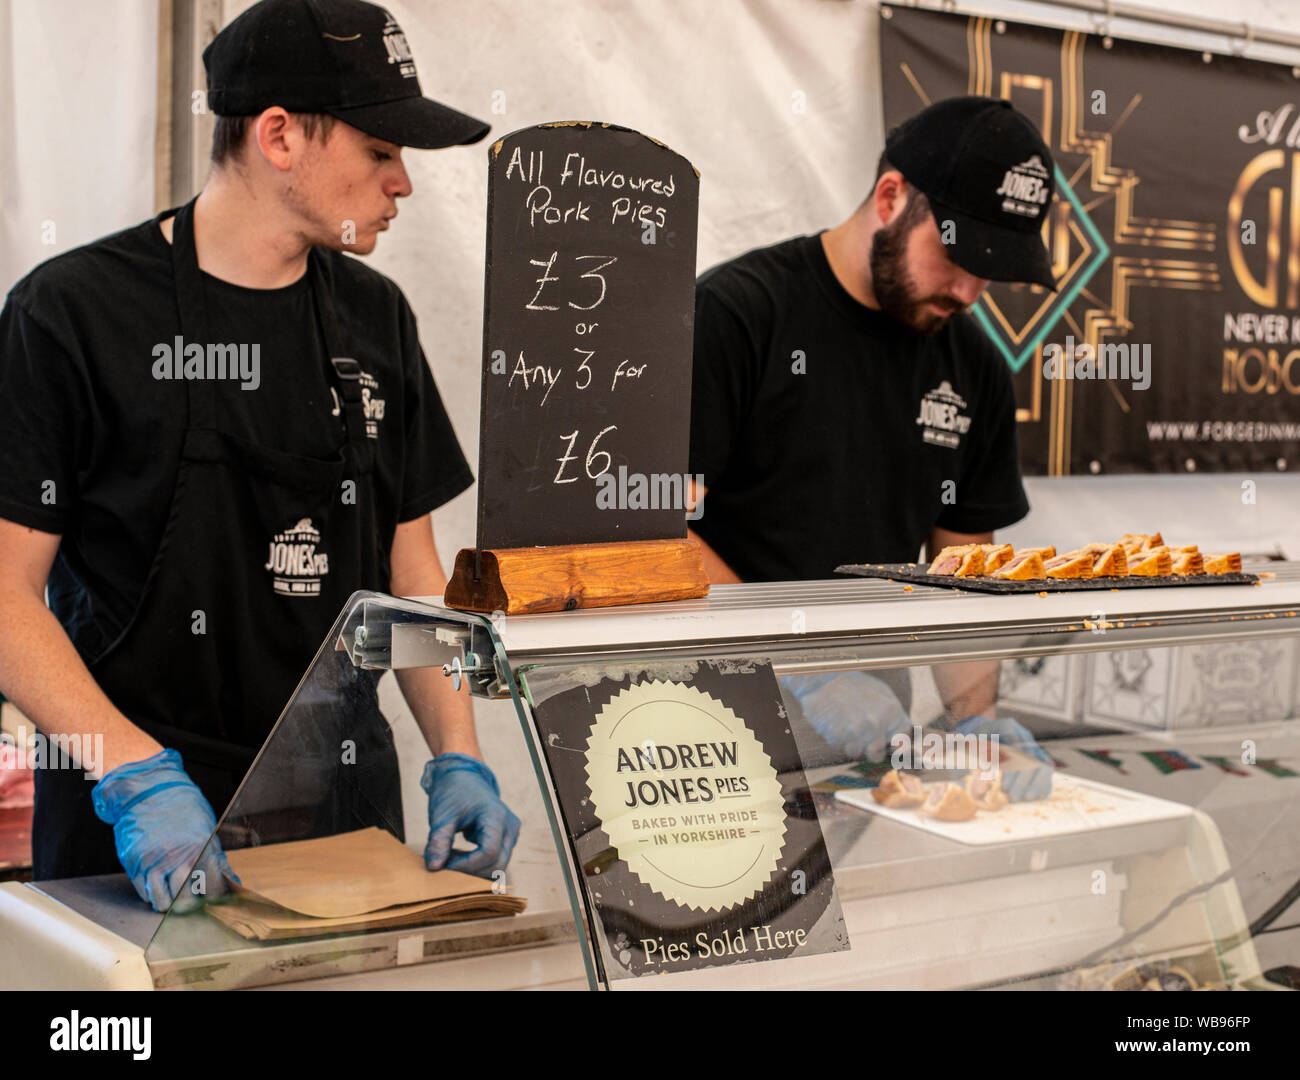 Employees at Yorkshire pork pie maker's Andrew Jones Pies stall, Harrogate Food and Drink Festival, Ripley, Harrogate, UK, 25 August 2019 Stock Photo